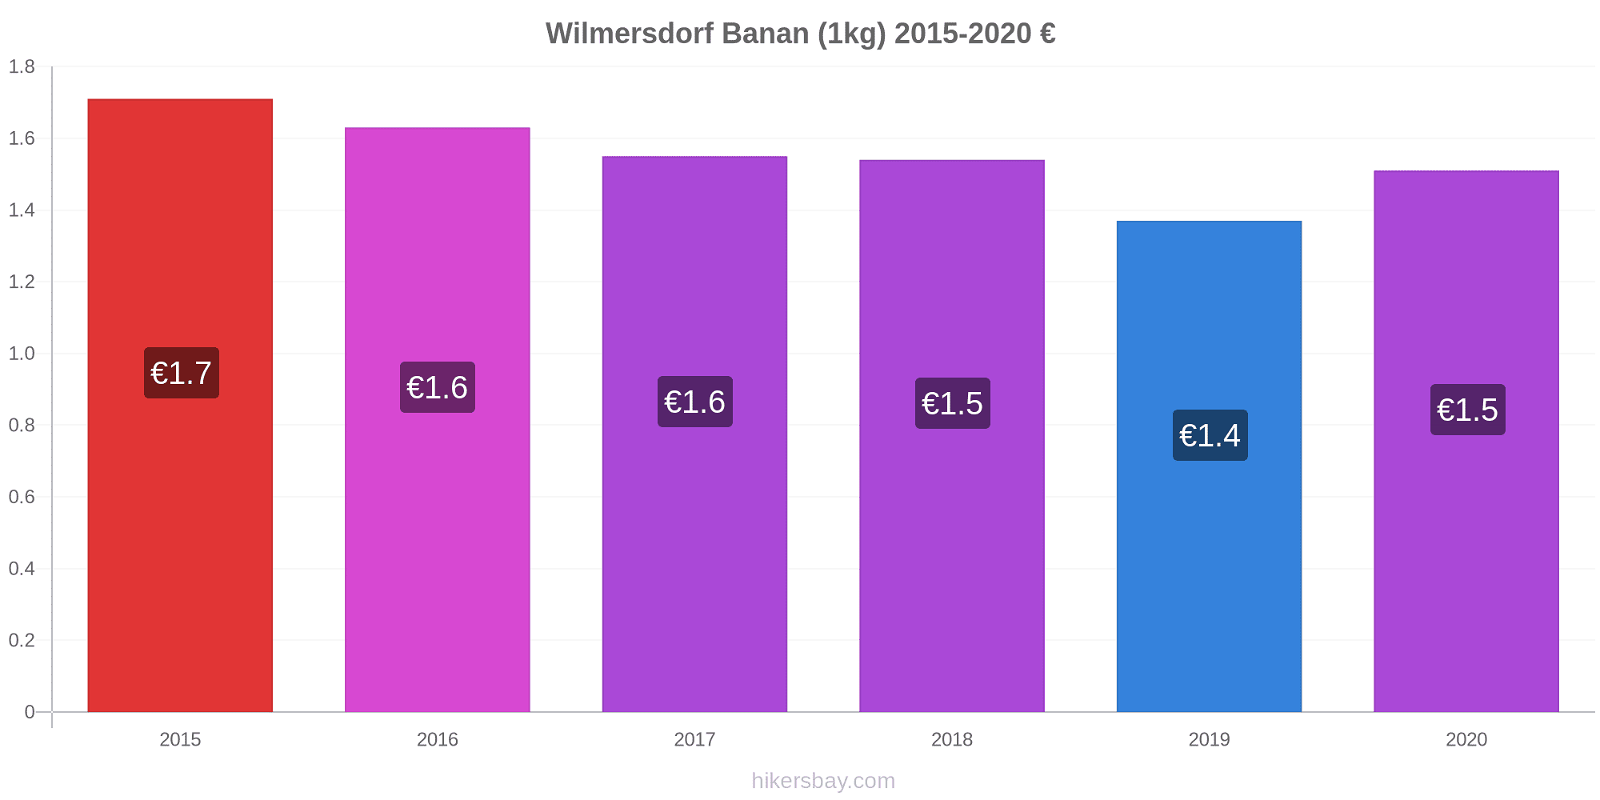 Wilmersdorf prisendringer Banan (1kg) hikersbay.com